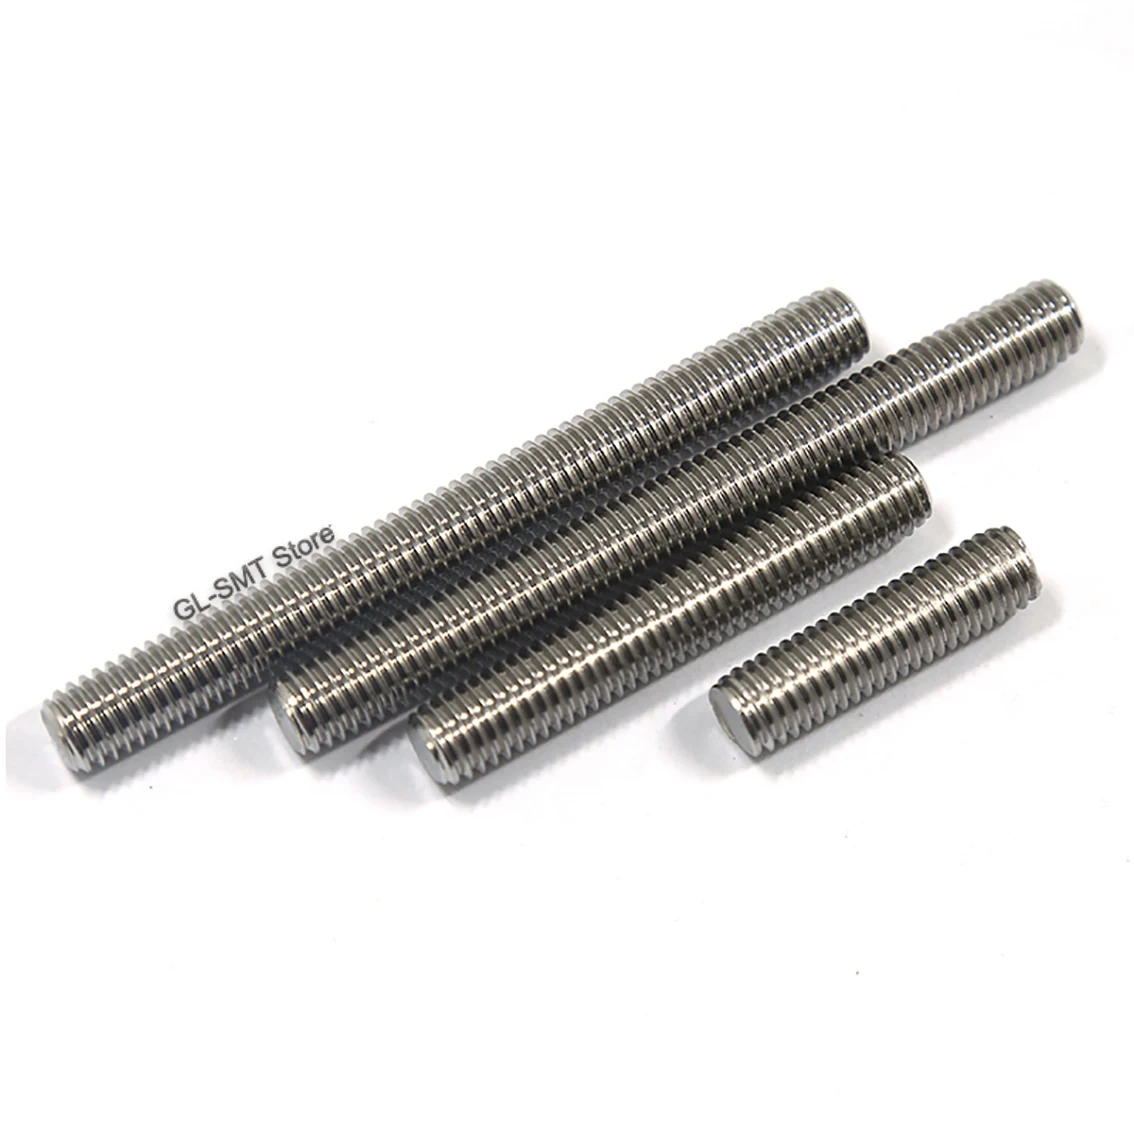 

1Pcs Full Threaded Rod M18 M20 Metric Wire Screw Rod Bolt Bar Studs 304 Stainless Steel Length 50mm-200mm